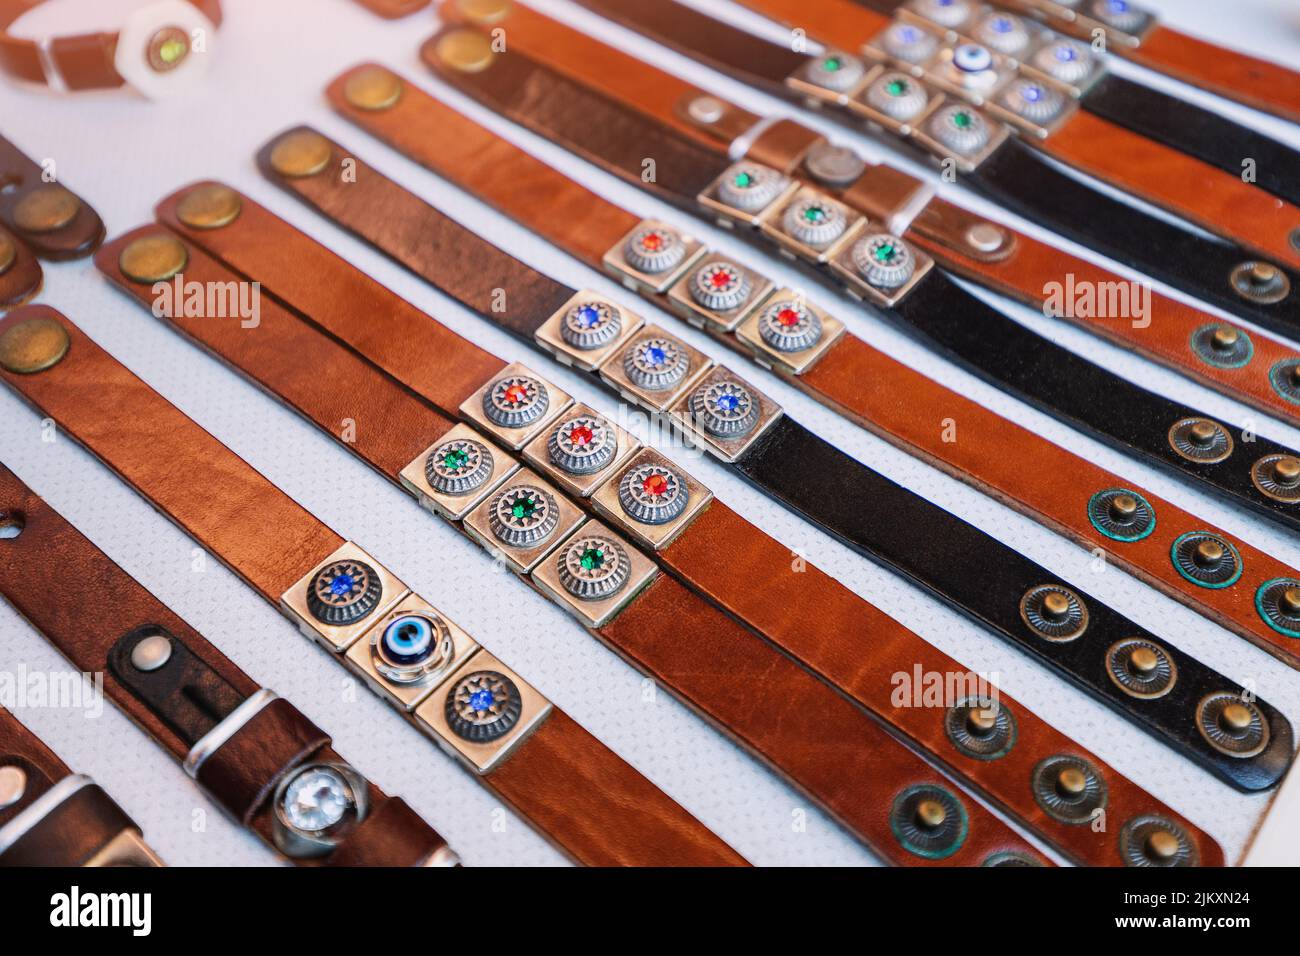 Trendy handmade leather bracelets and wristbands for sale at artisans market. Handcraft souvenir at flea market. Purchase of elegant souvenirs Stock Photo